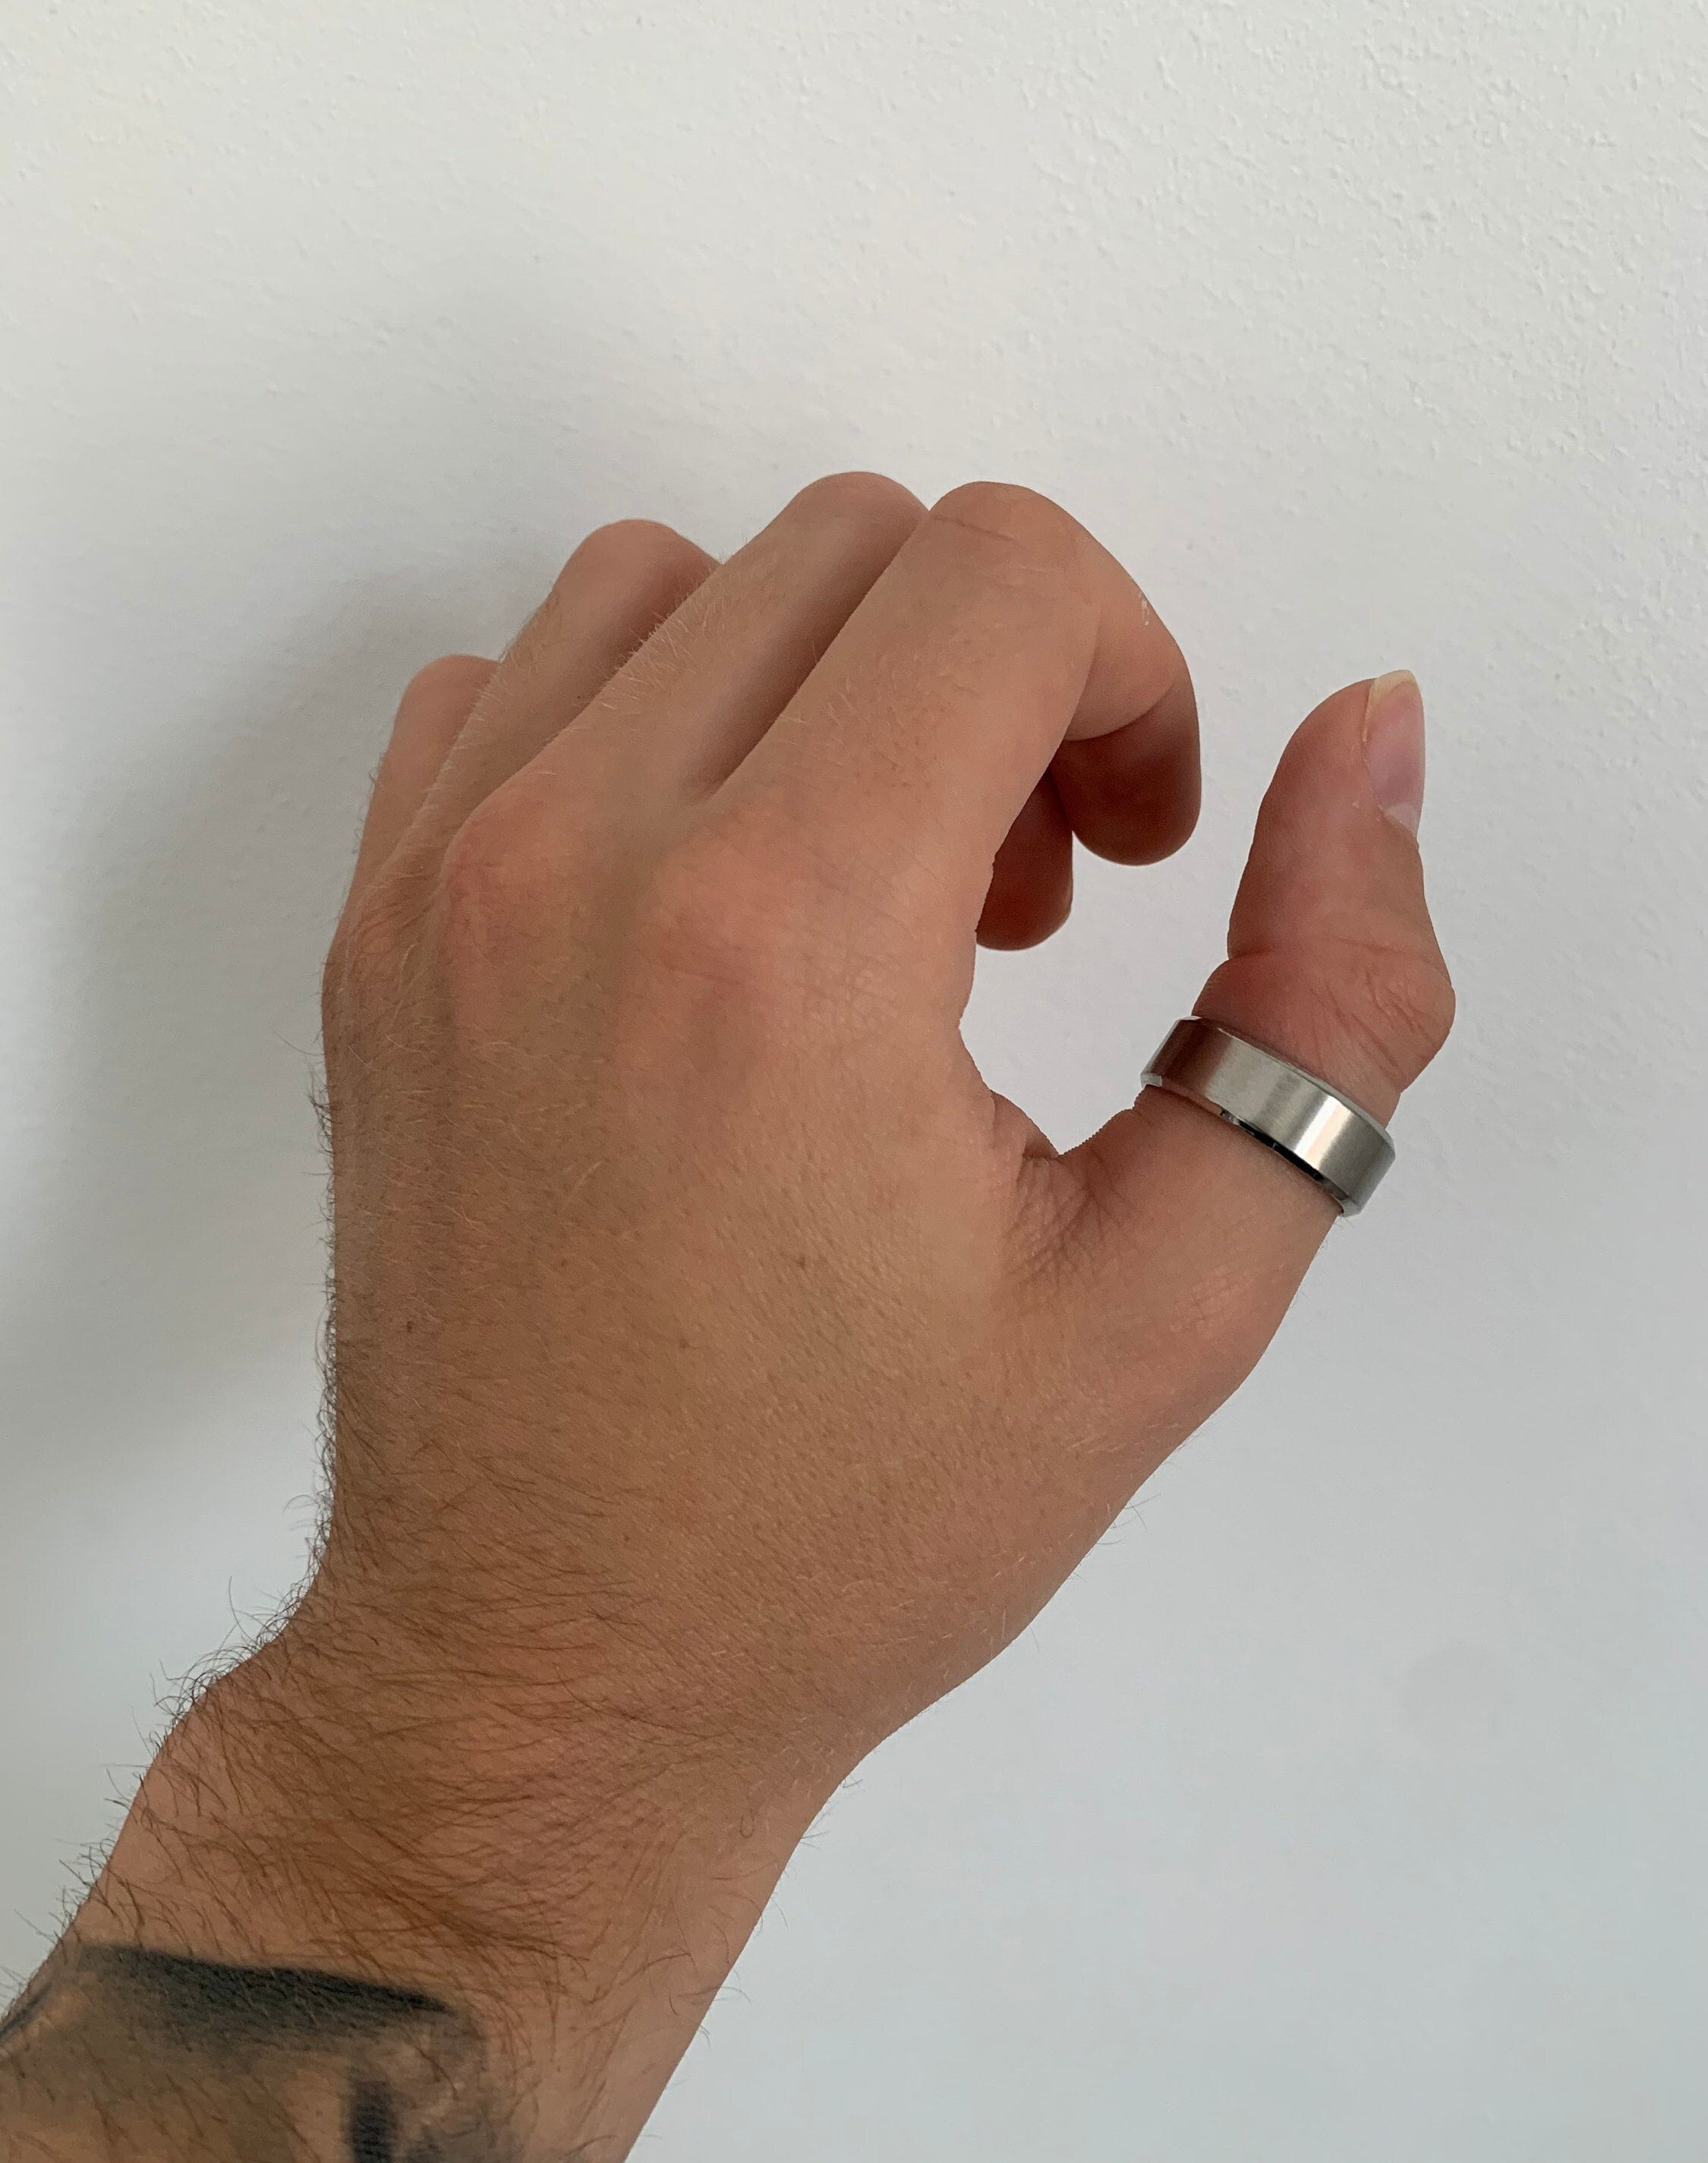 PRAYMOS 925 Sterling Silver Snake Rings Thumb Ring Open Adjustable Rings  for Women Men Size 7 to 9 (Maori ring)|Amazon.com